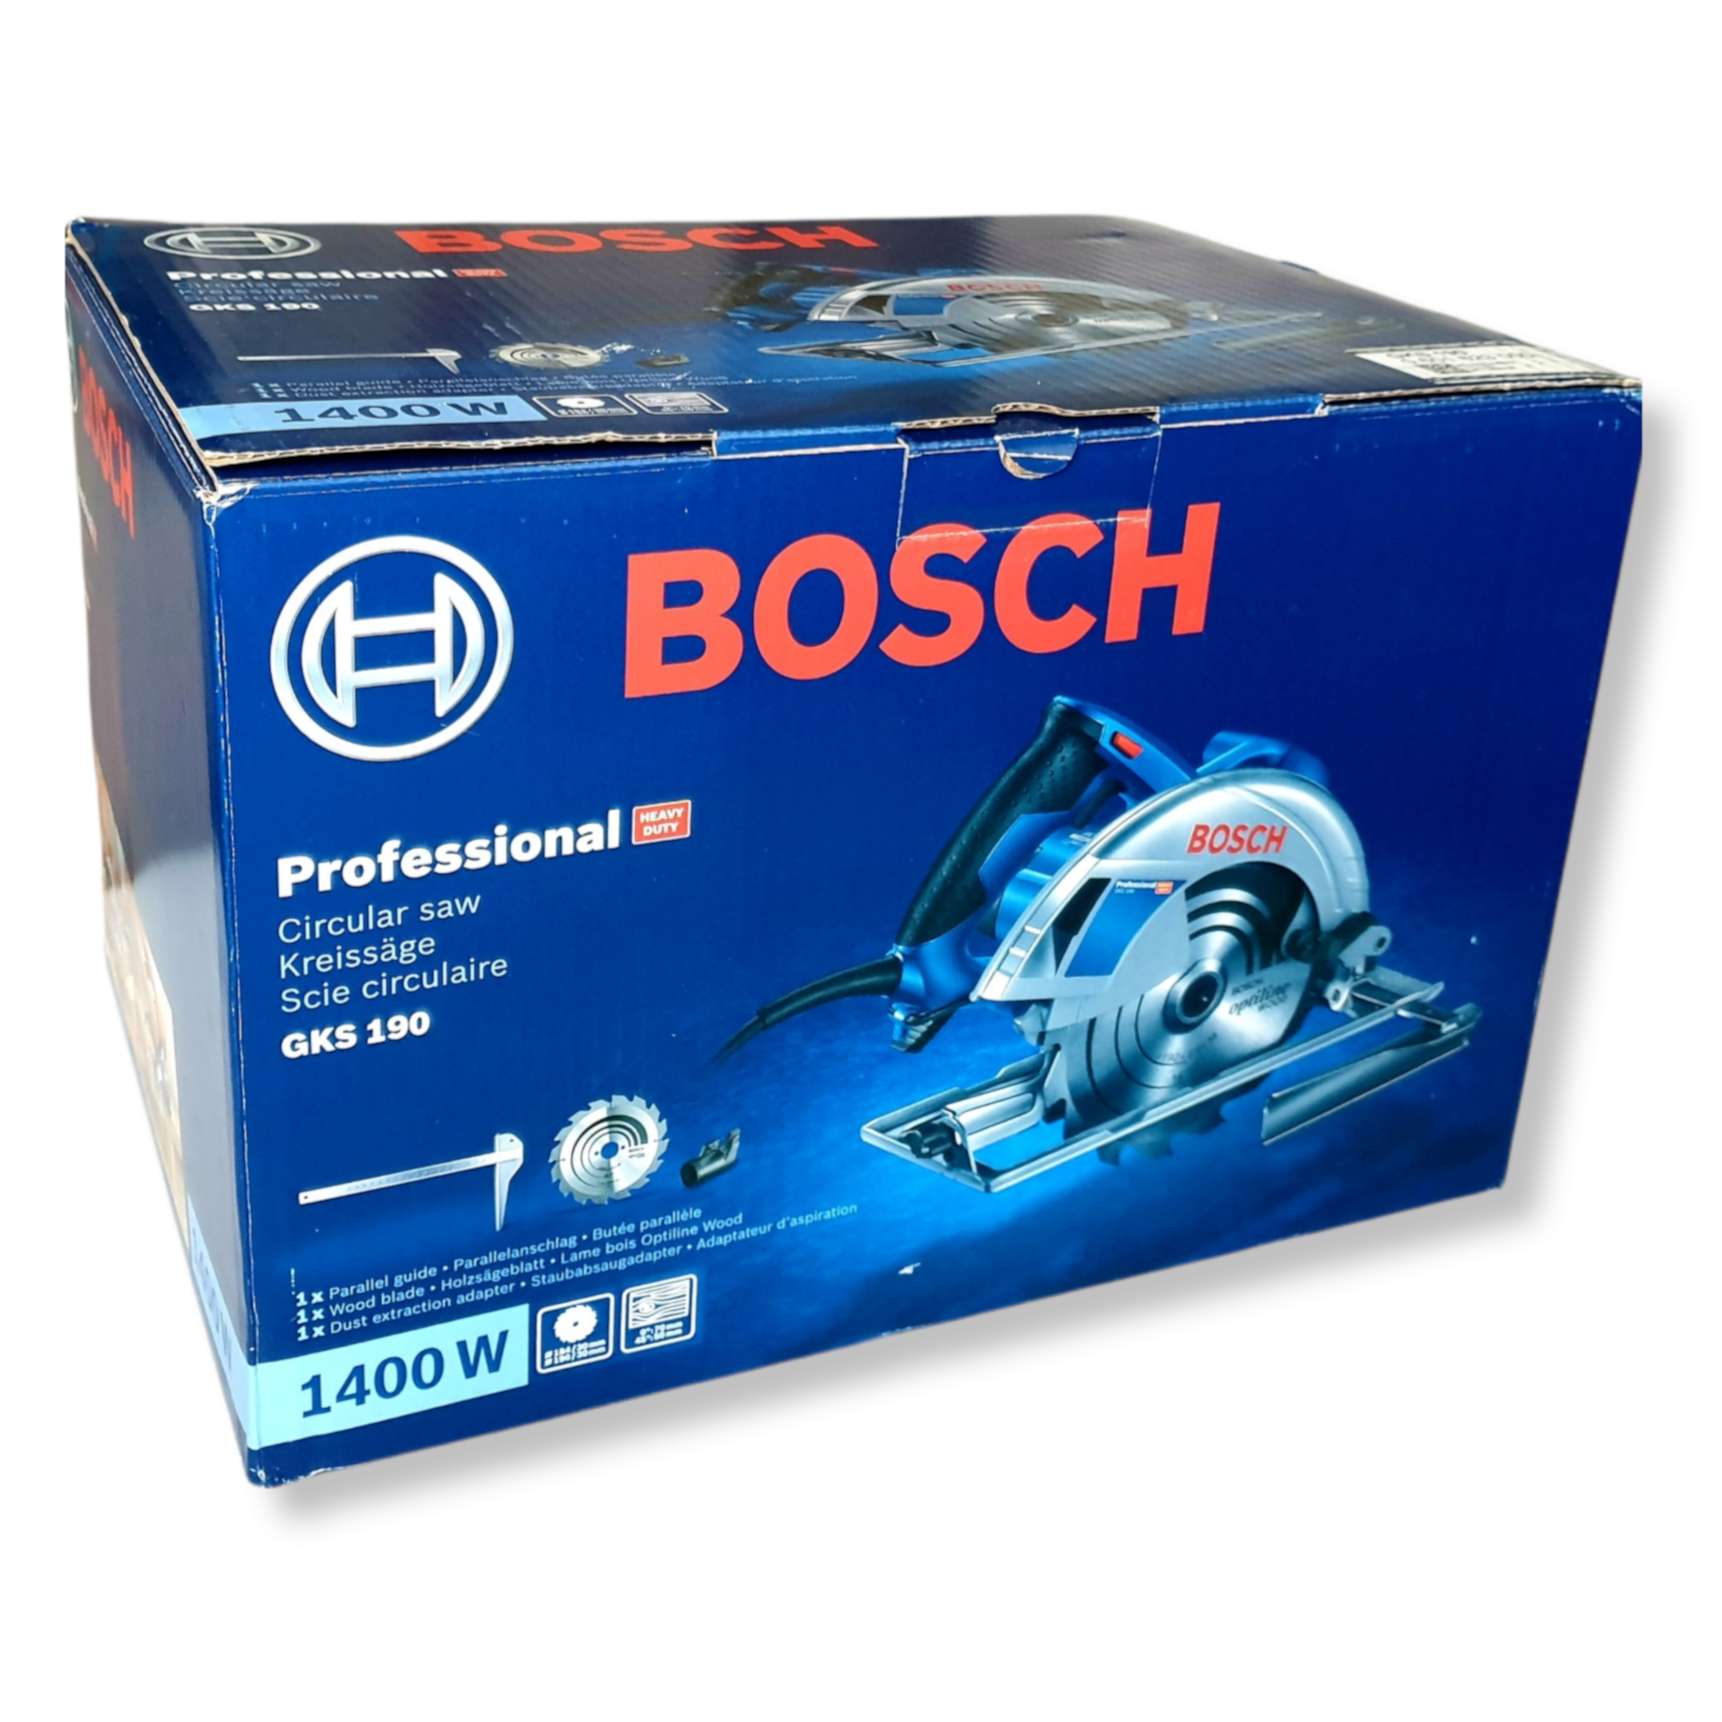 Bosch Professional Handkreissäge GKS 190 – 1400 Watt - iTEMZ4U